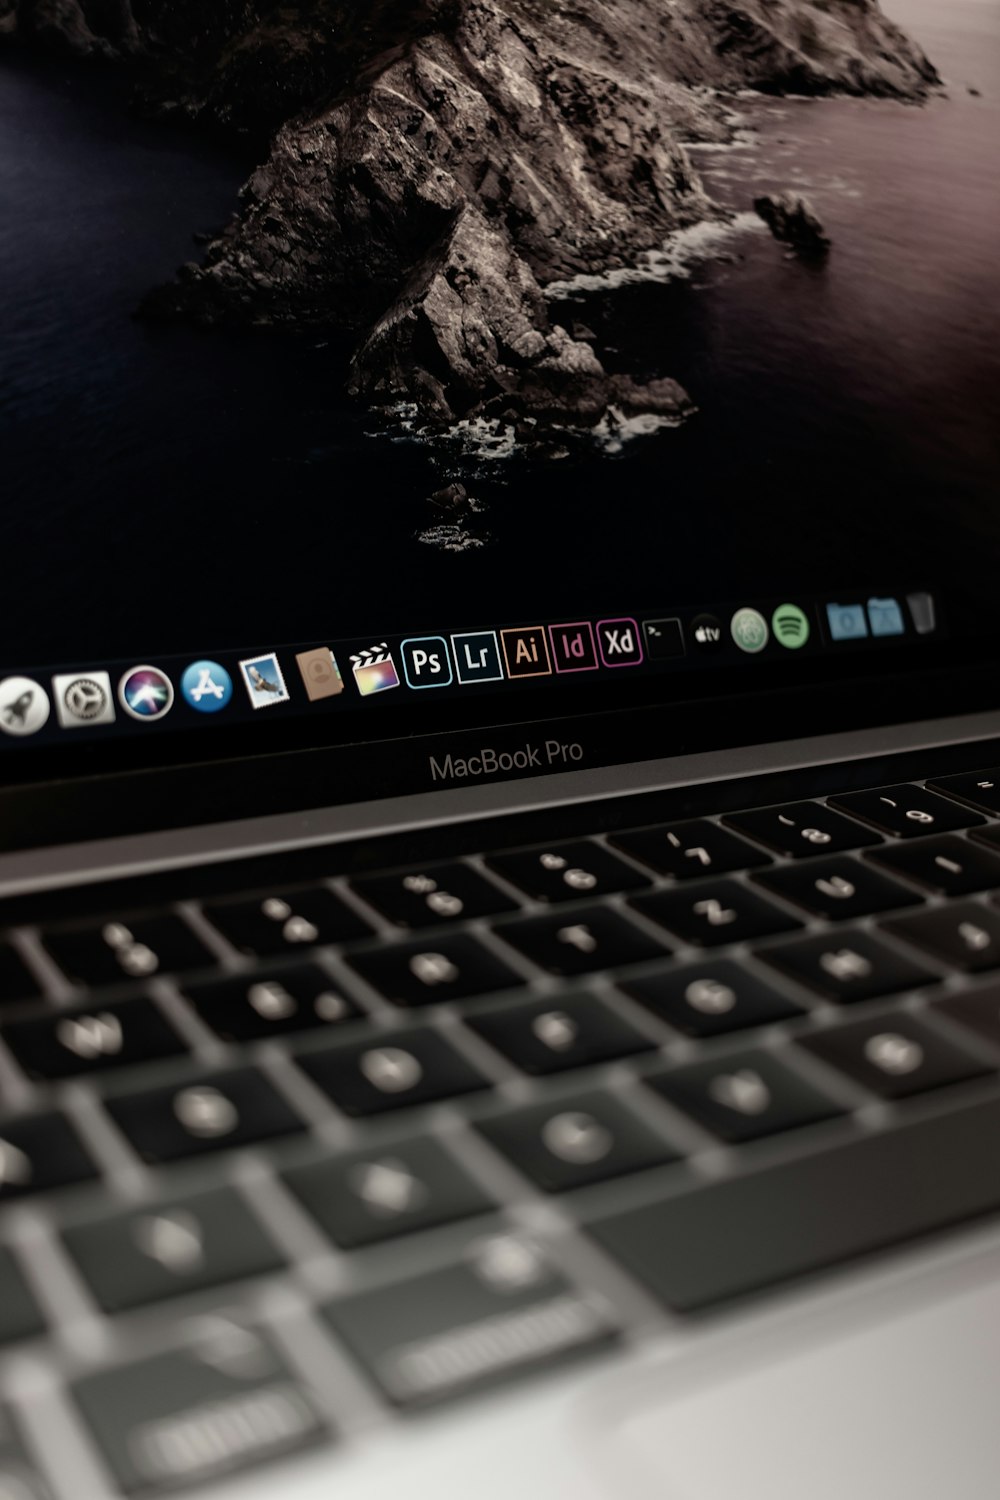 MacBook Pro displaying island